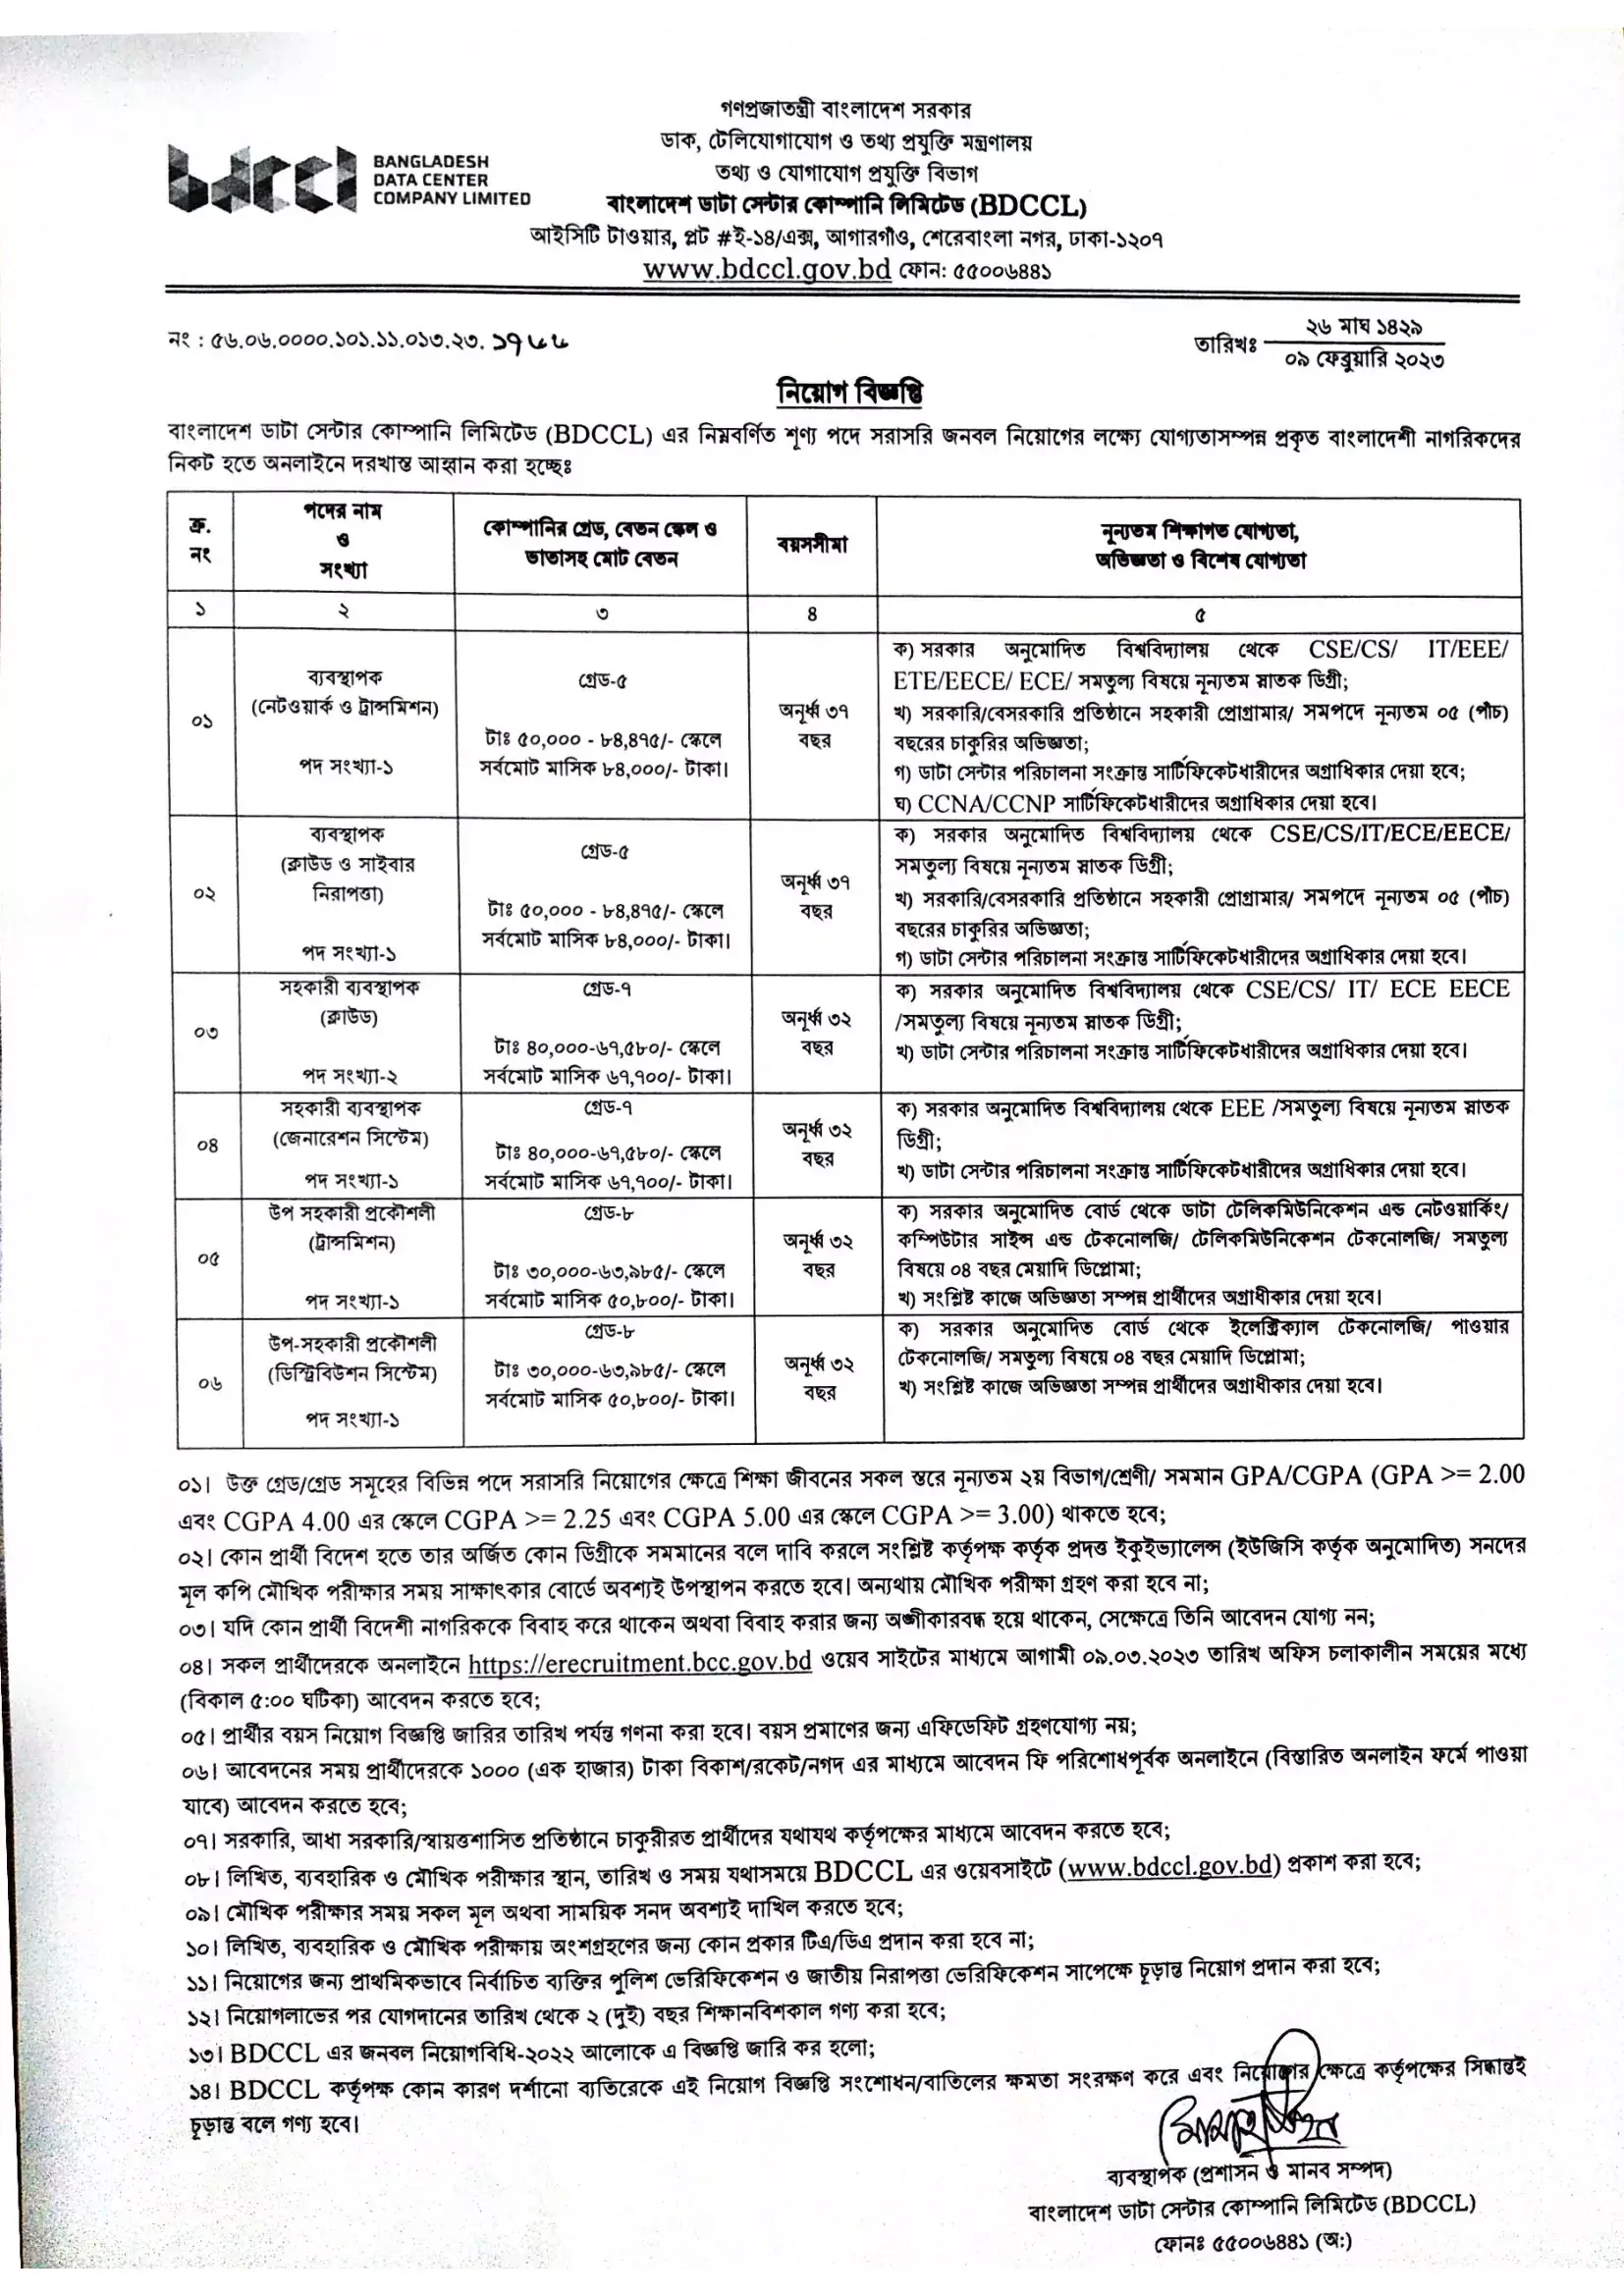 Bangladesh Data Center Company Limited (BDCCL) job circular published on 09 February 2023